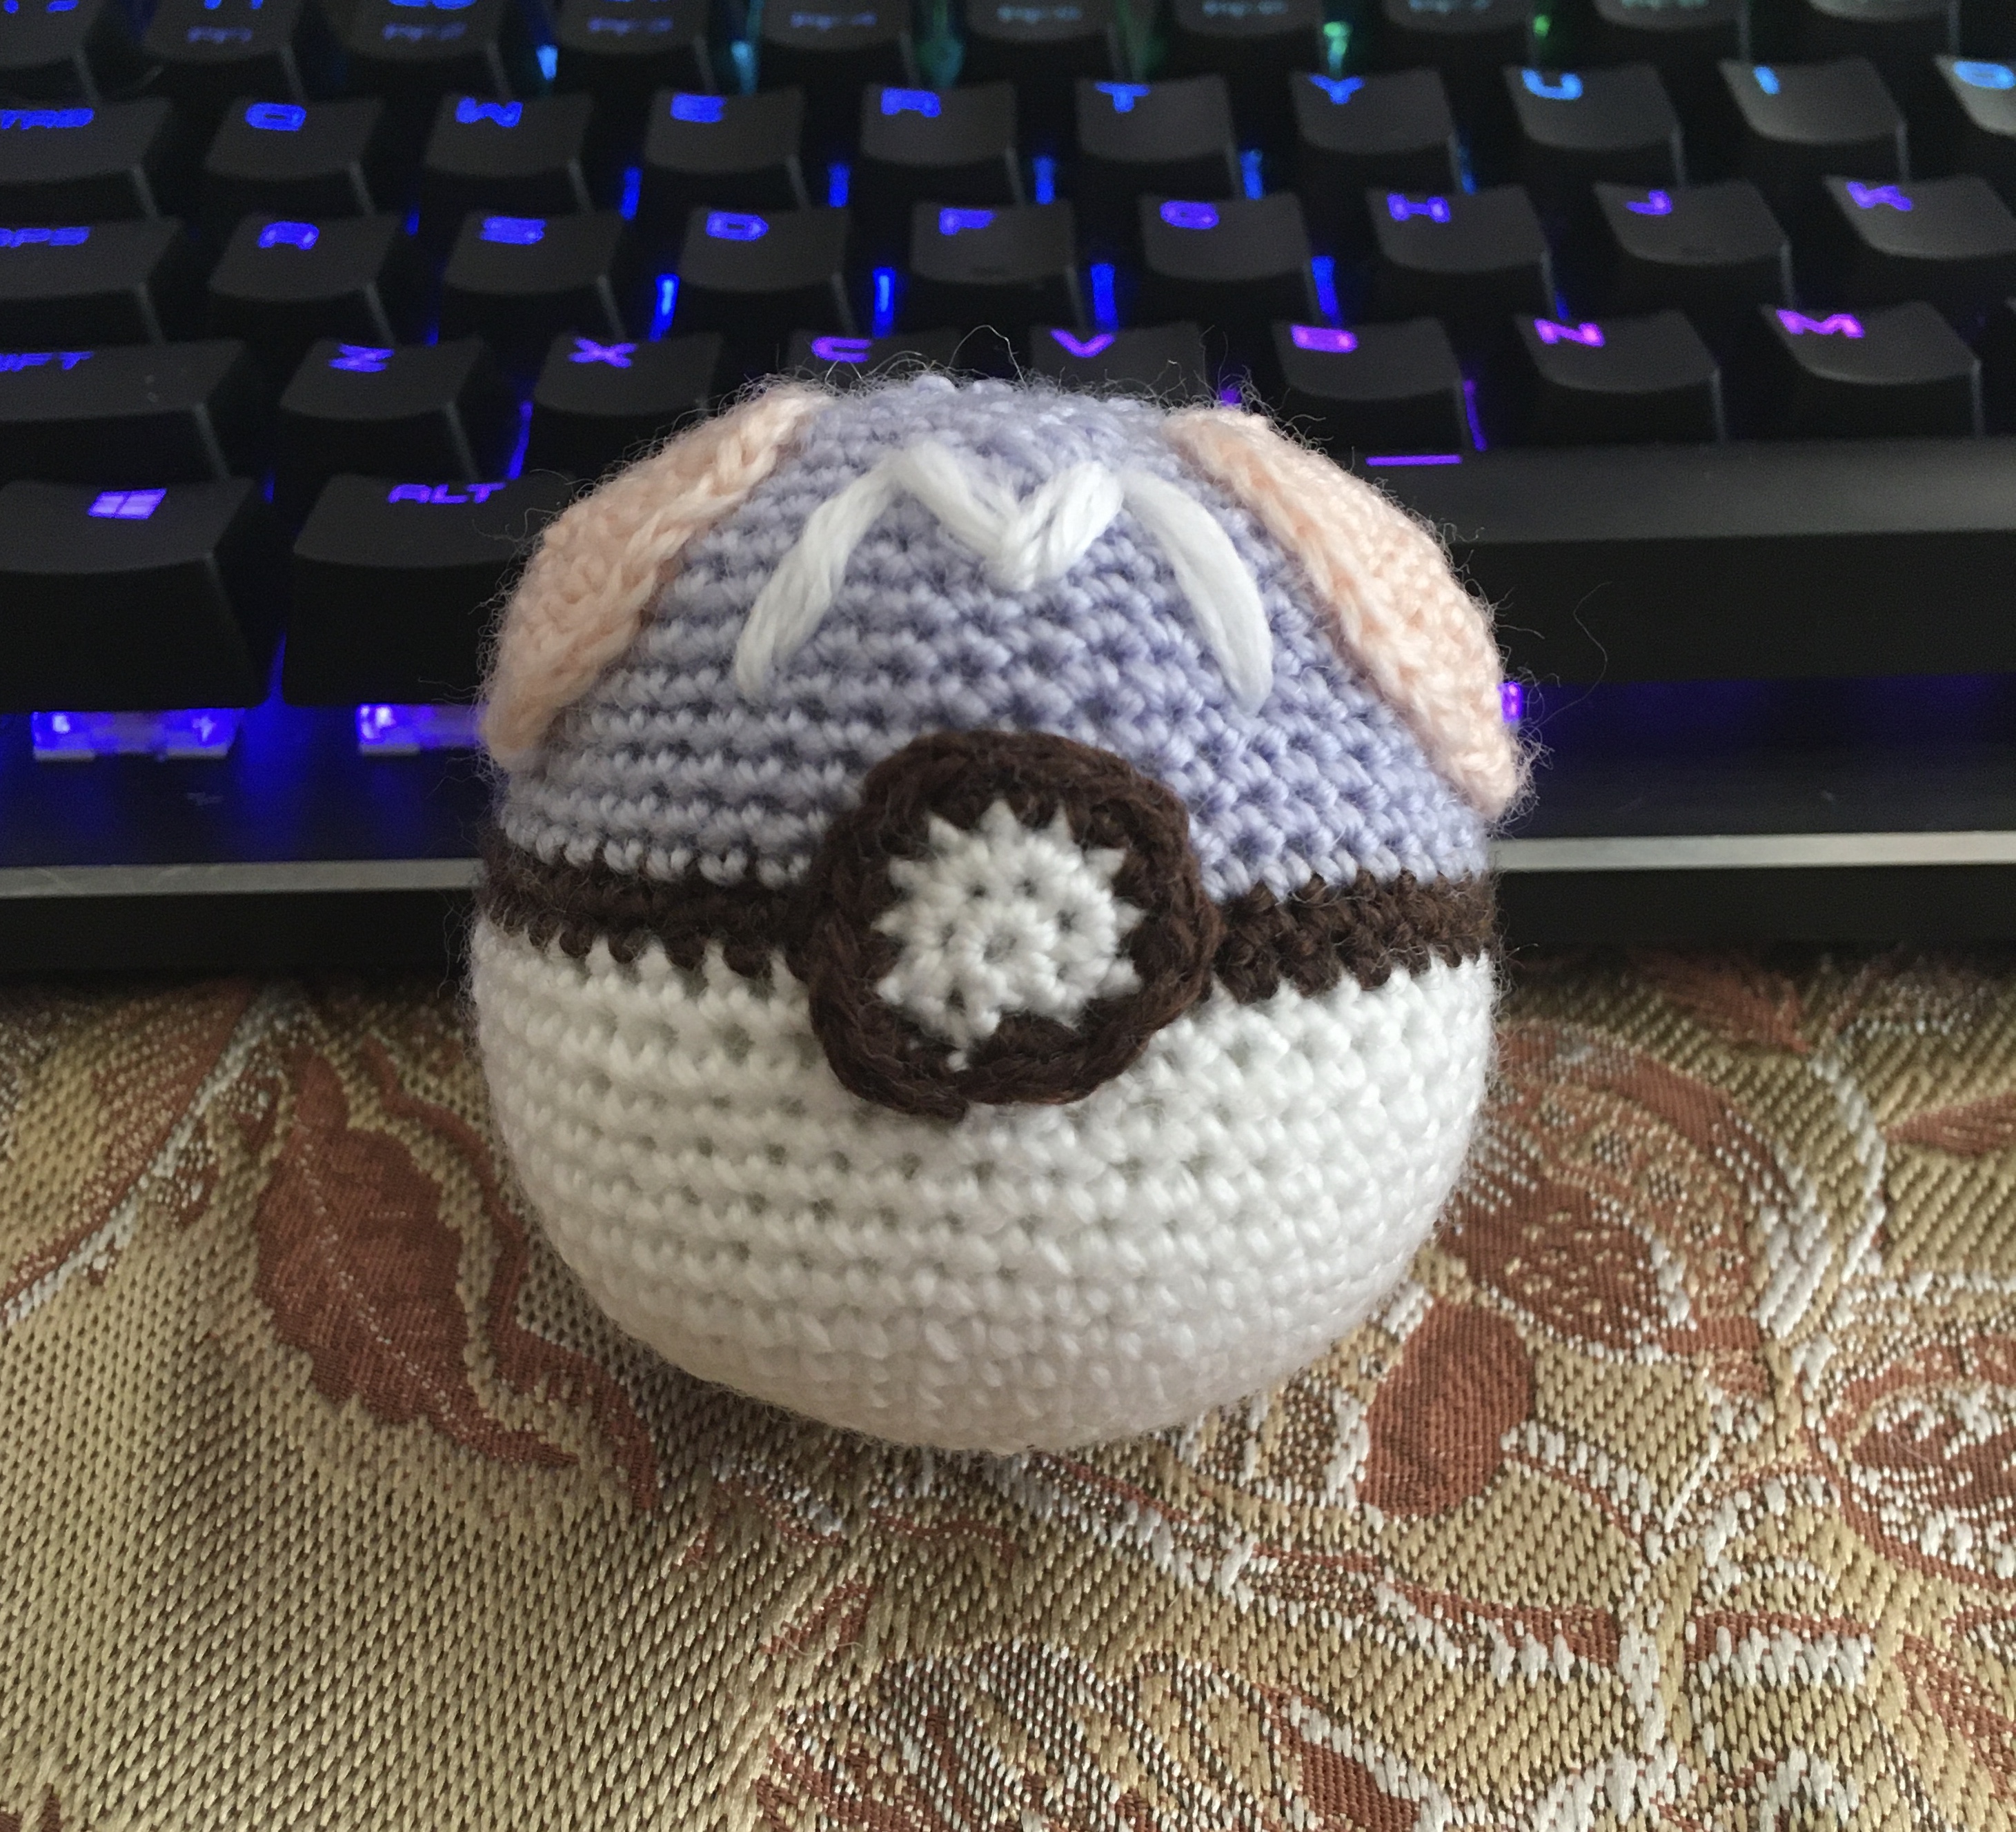 pictured: An Amigurumi crochet of a Pokemon Master Ball.